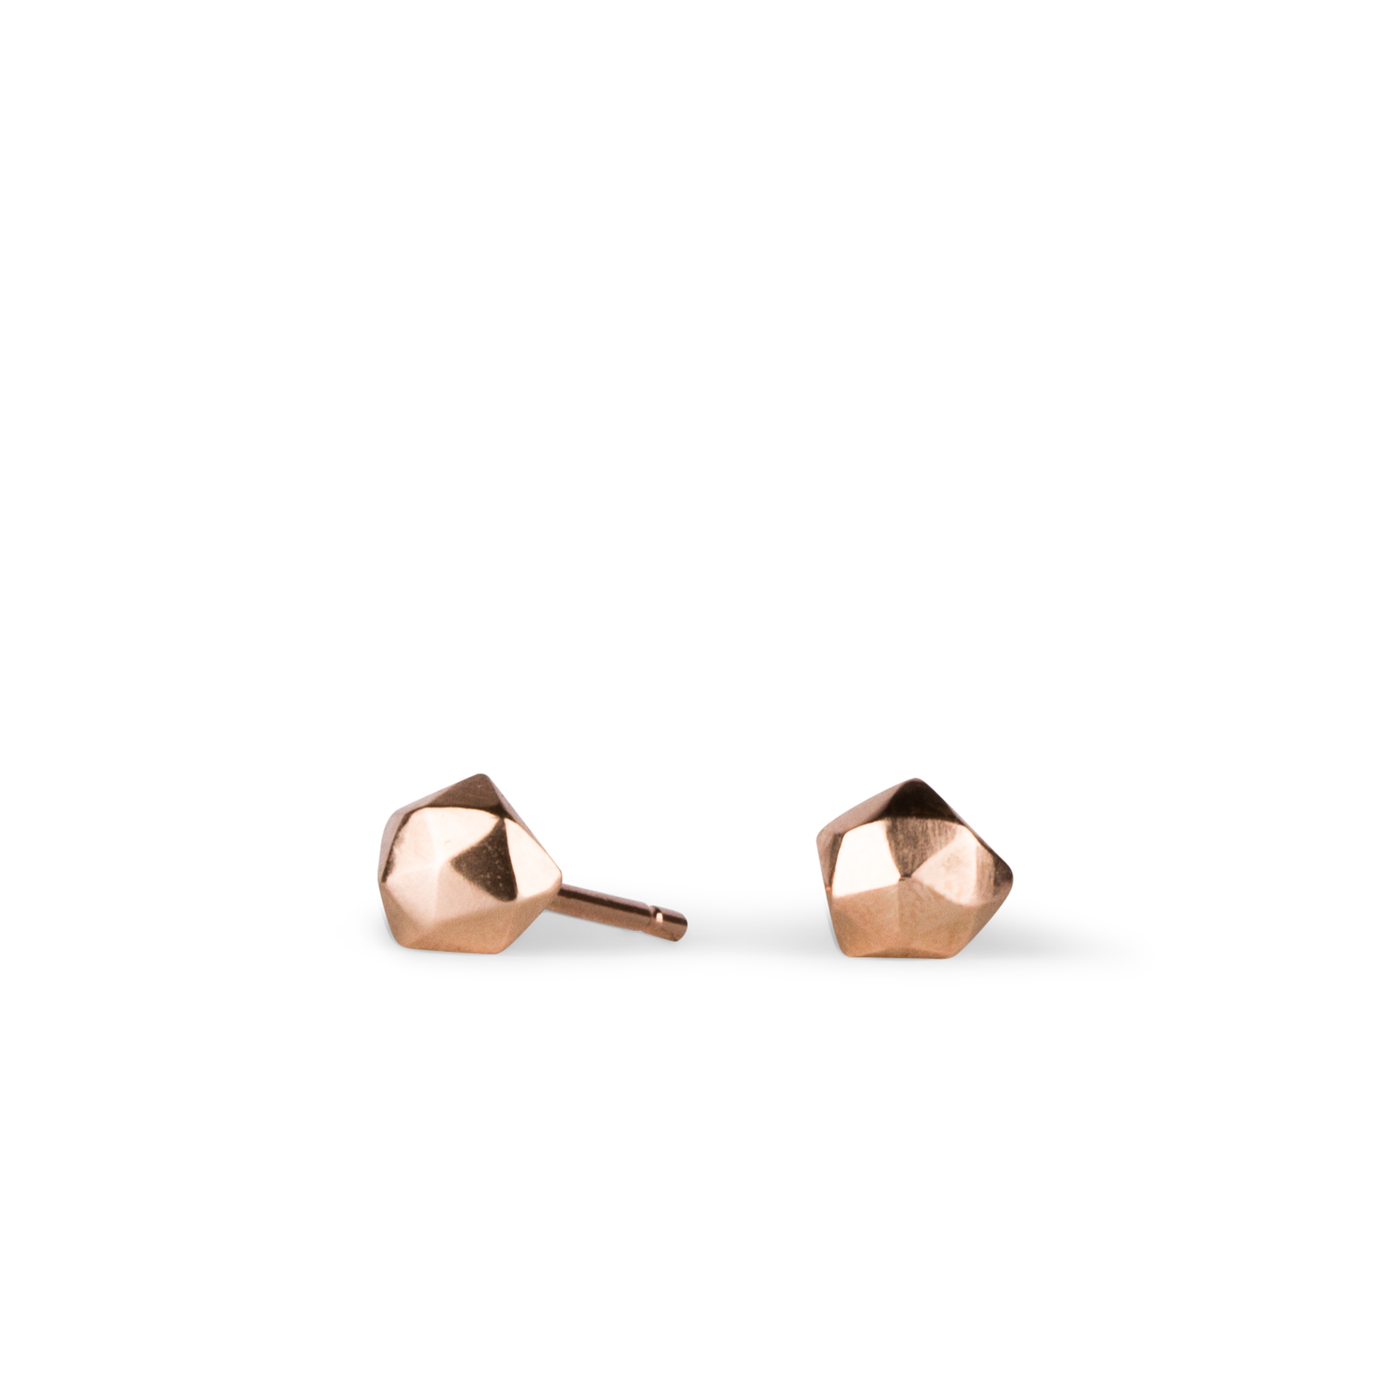 Rose Gold Micro Fragment Stud Earrings by Corey Egan alternate view